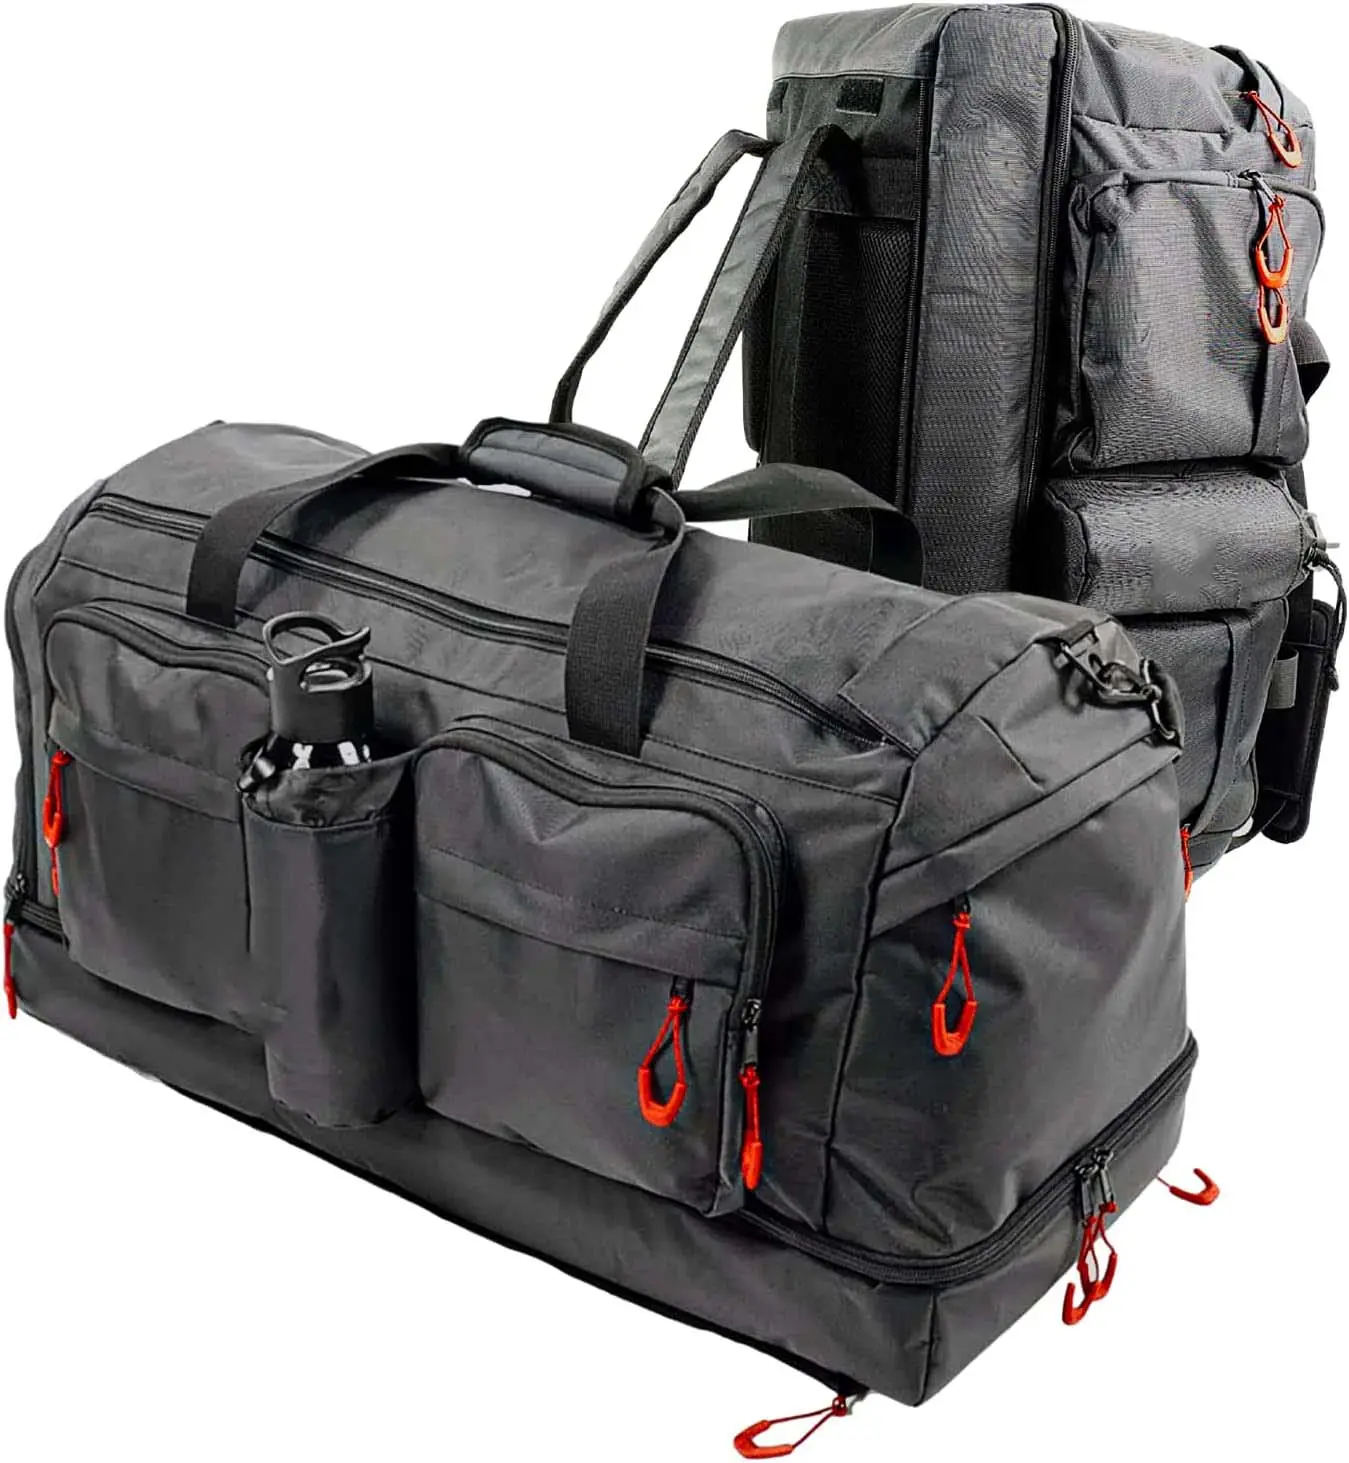 Waterproof durable 3 in1 Large gym bag Travel Duffle Bag Sport Bag for men